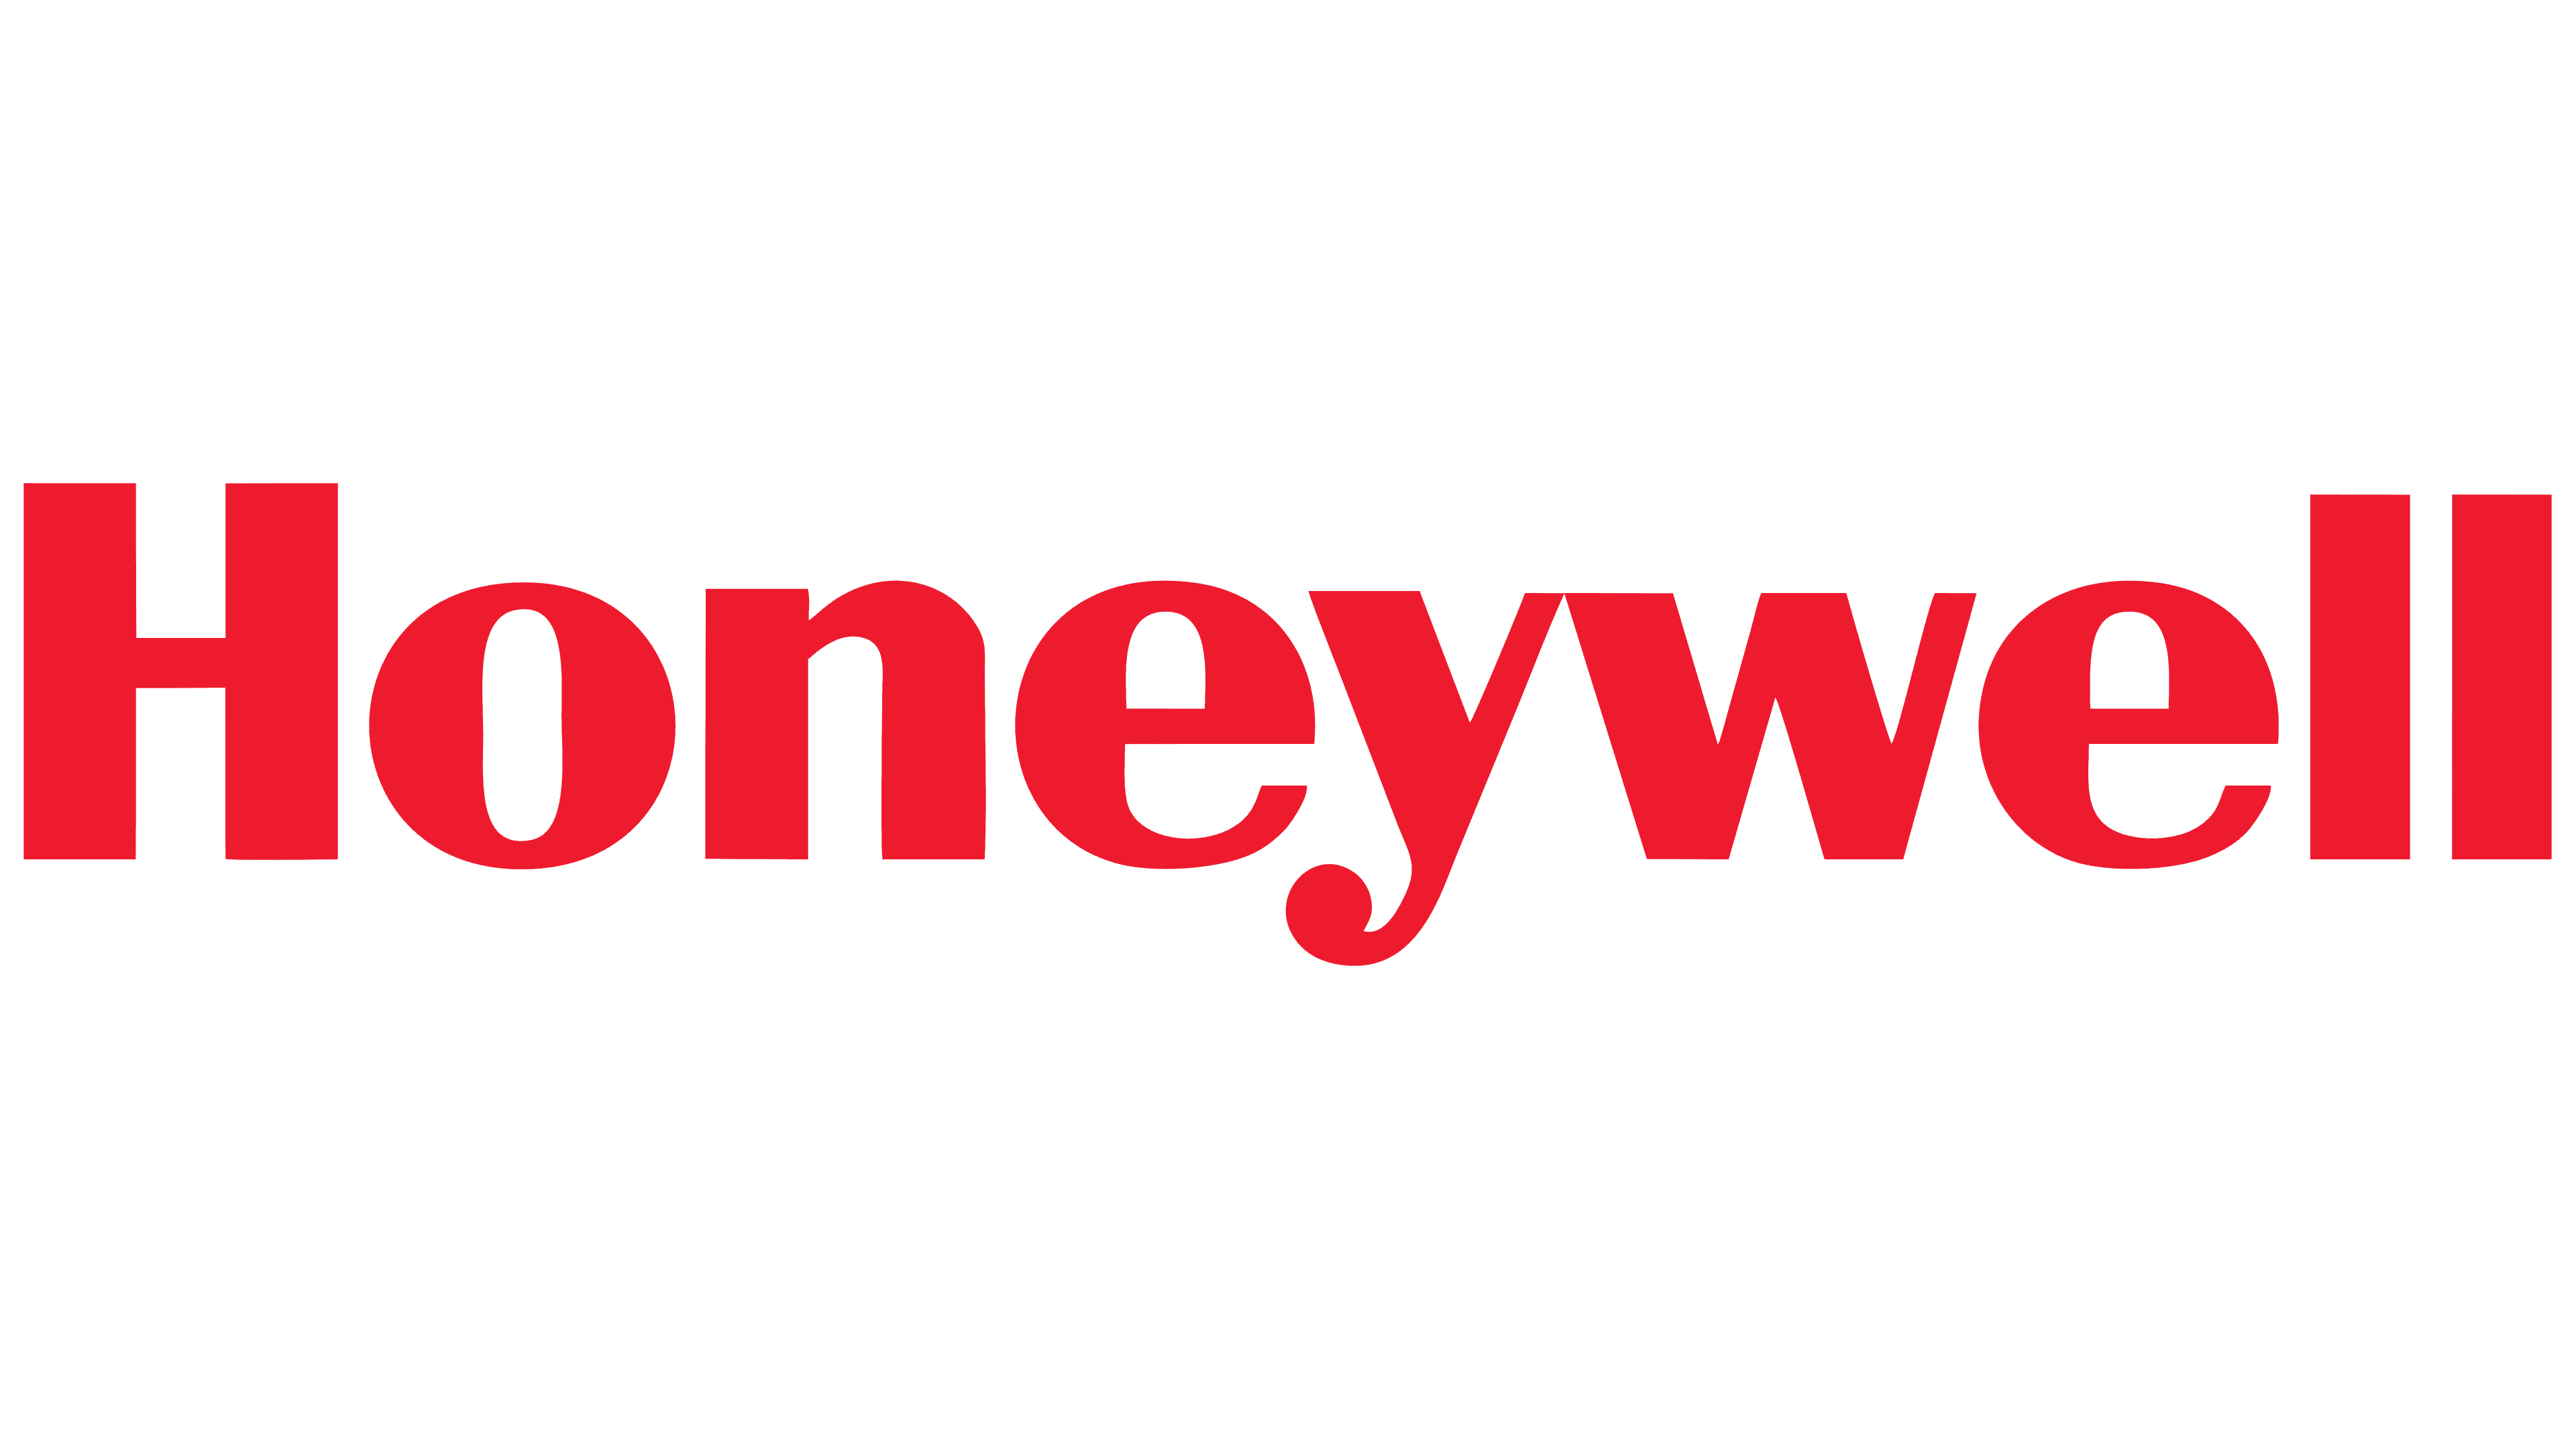 honeywell service install and repair hvac company toronto